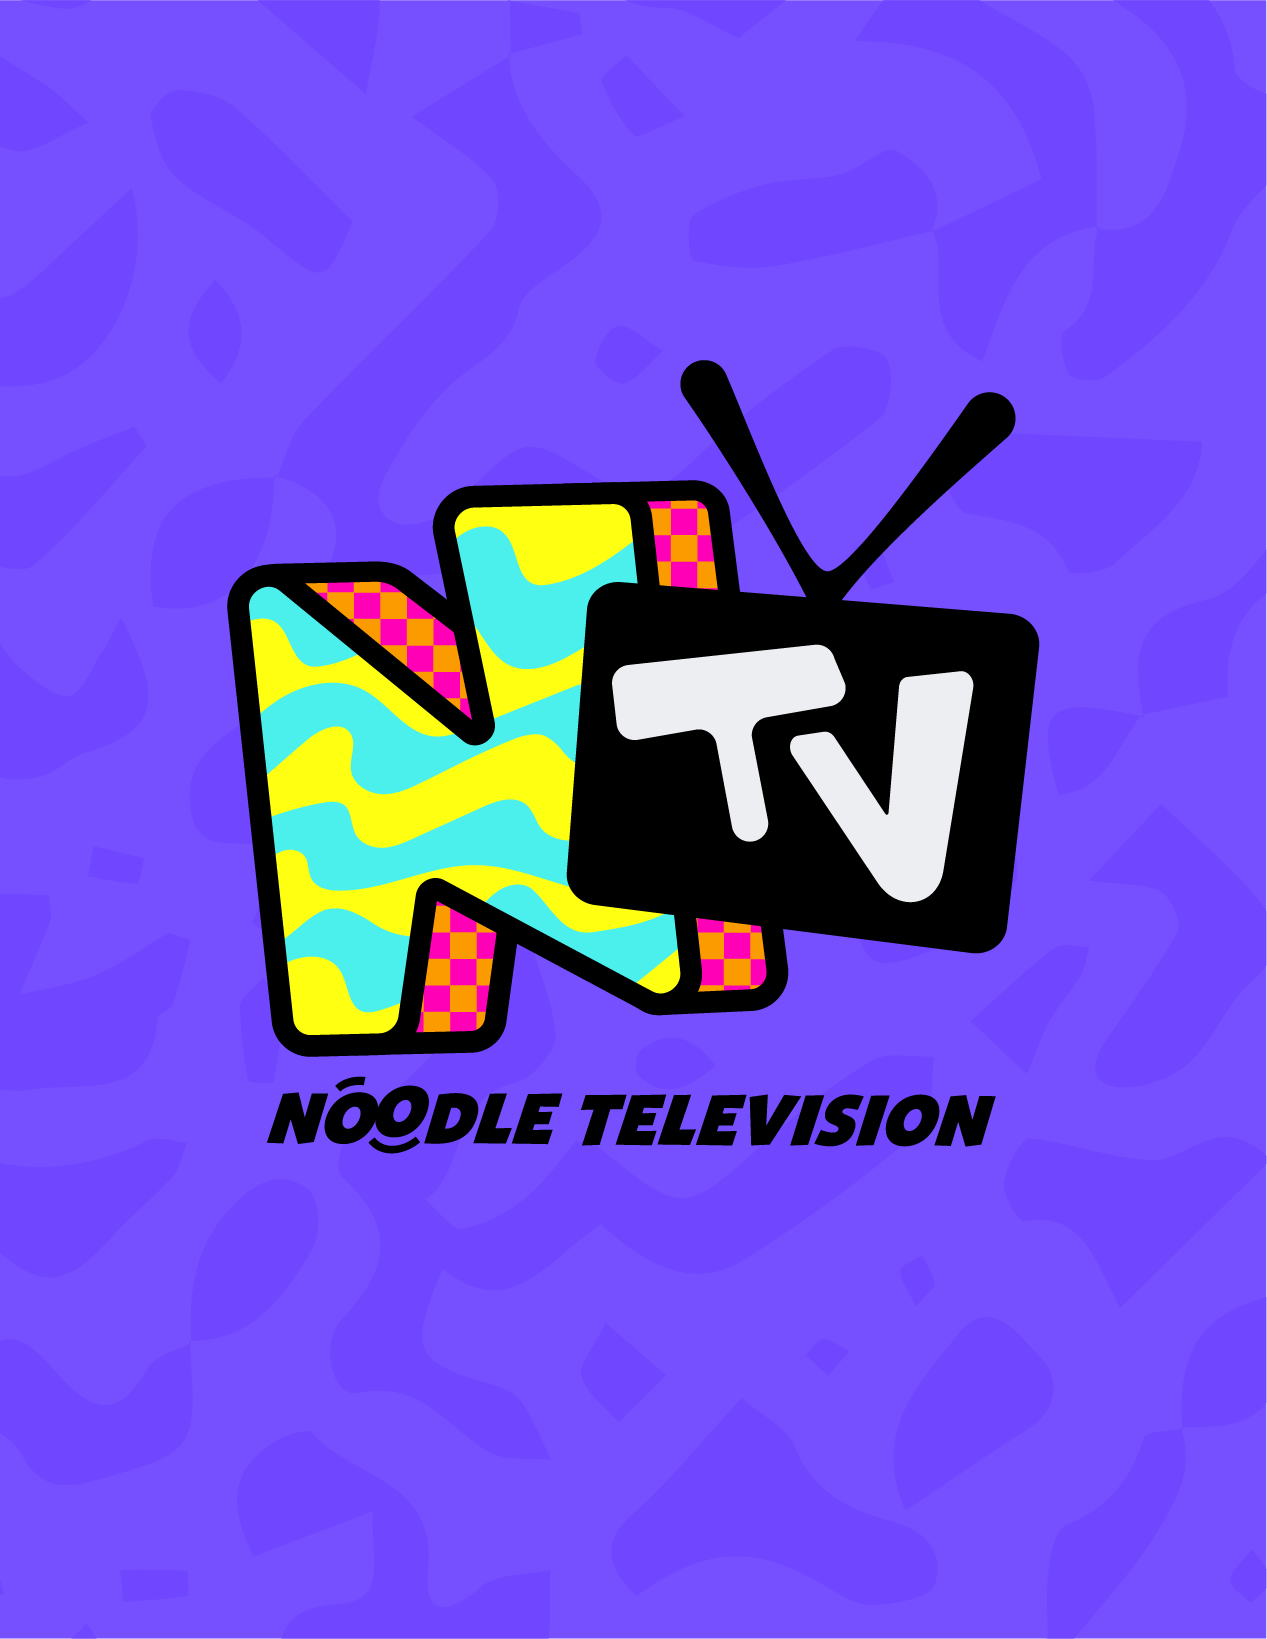 NTV: Noodle Television